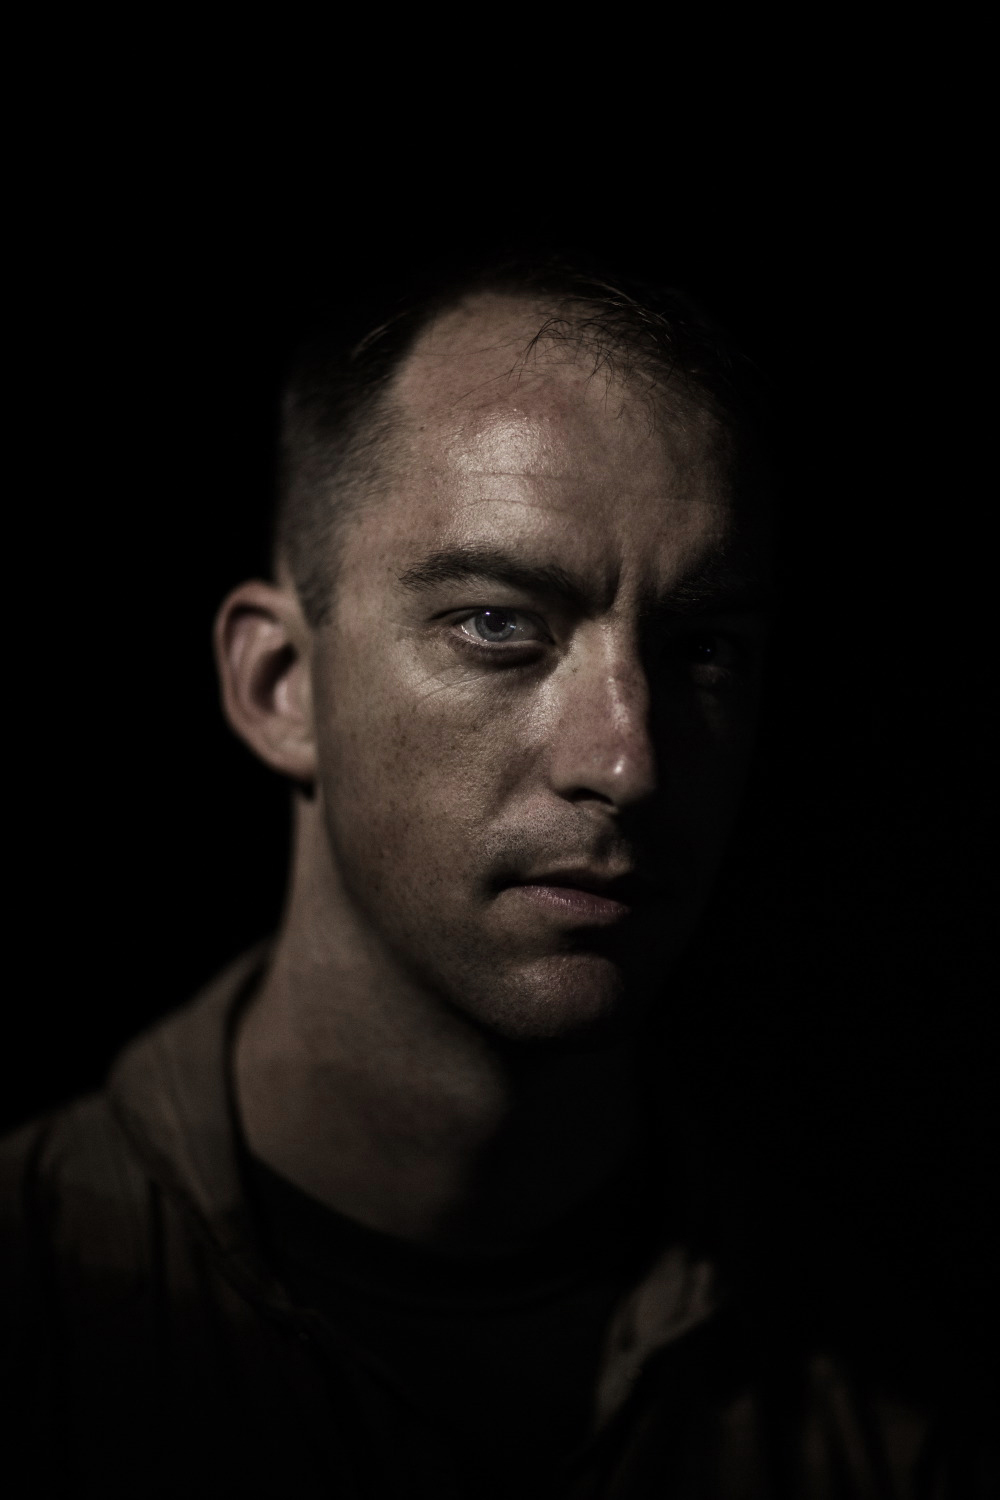  Call sign Betty, U.S. Marine Capt. Kyle Wilson, Thunderbolts Marine Fighter Attack Squadron, USS Roosevelt, 2015.   